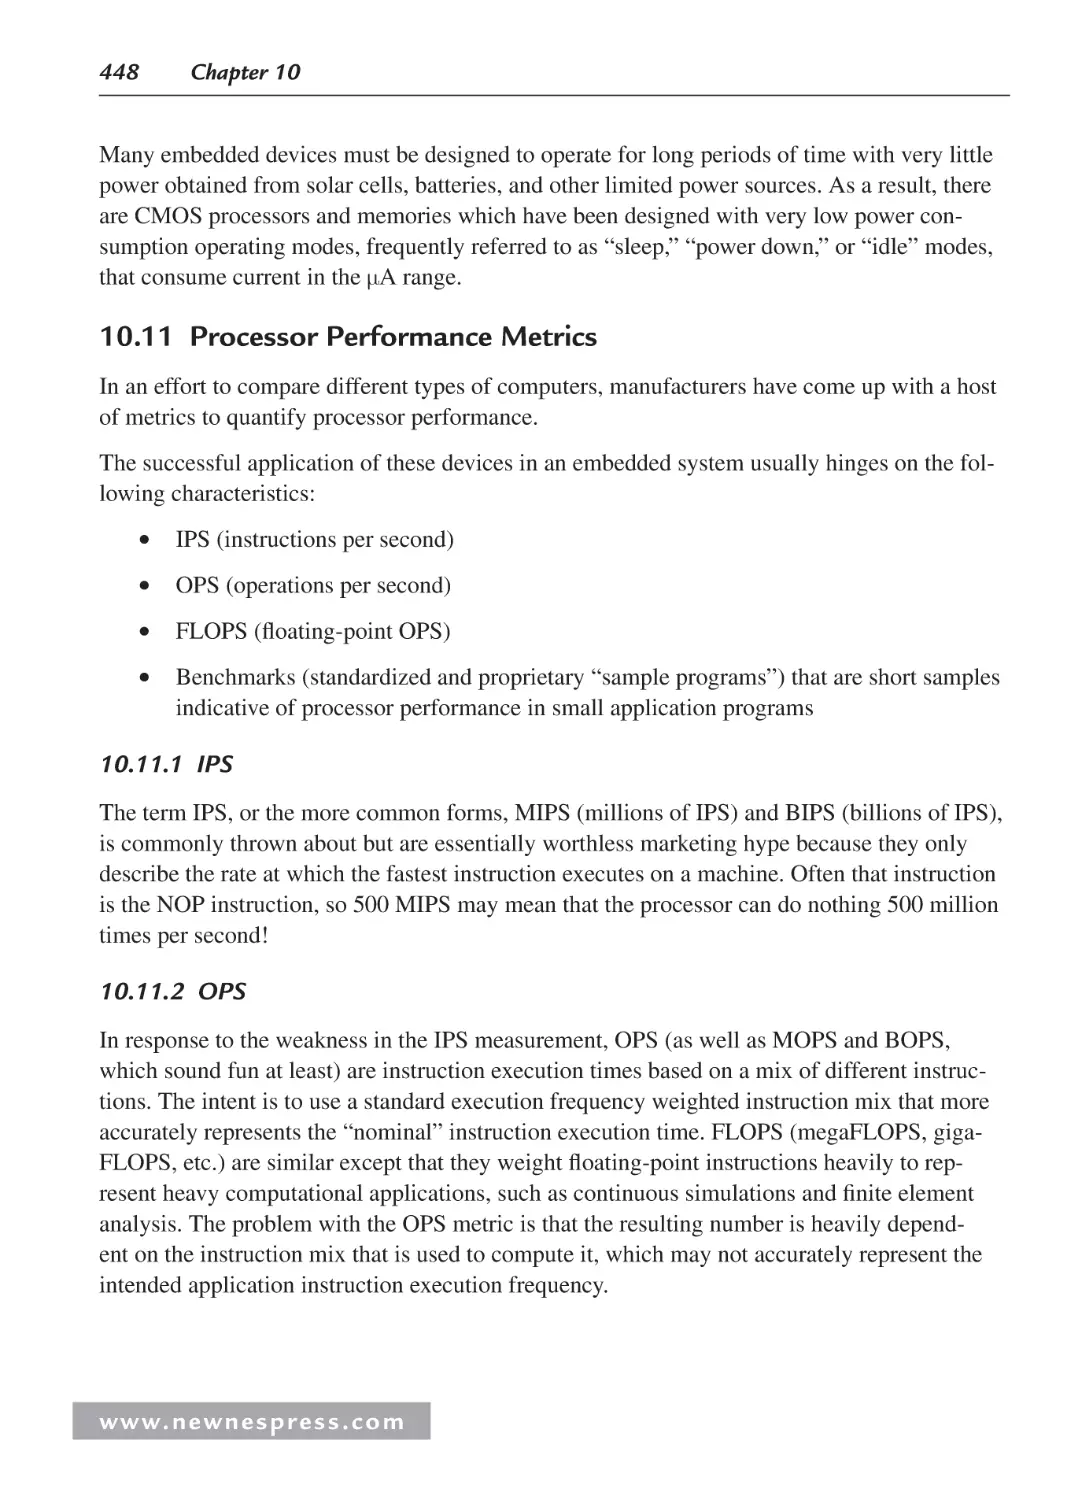 10.11 Processor Performance Metrics